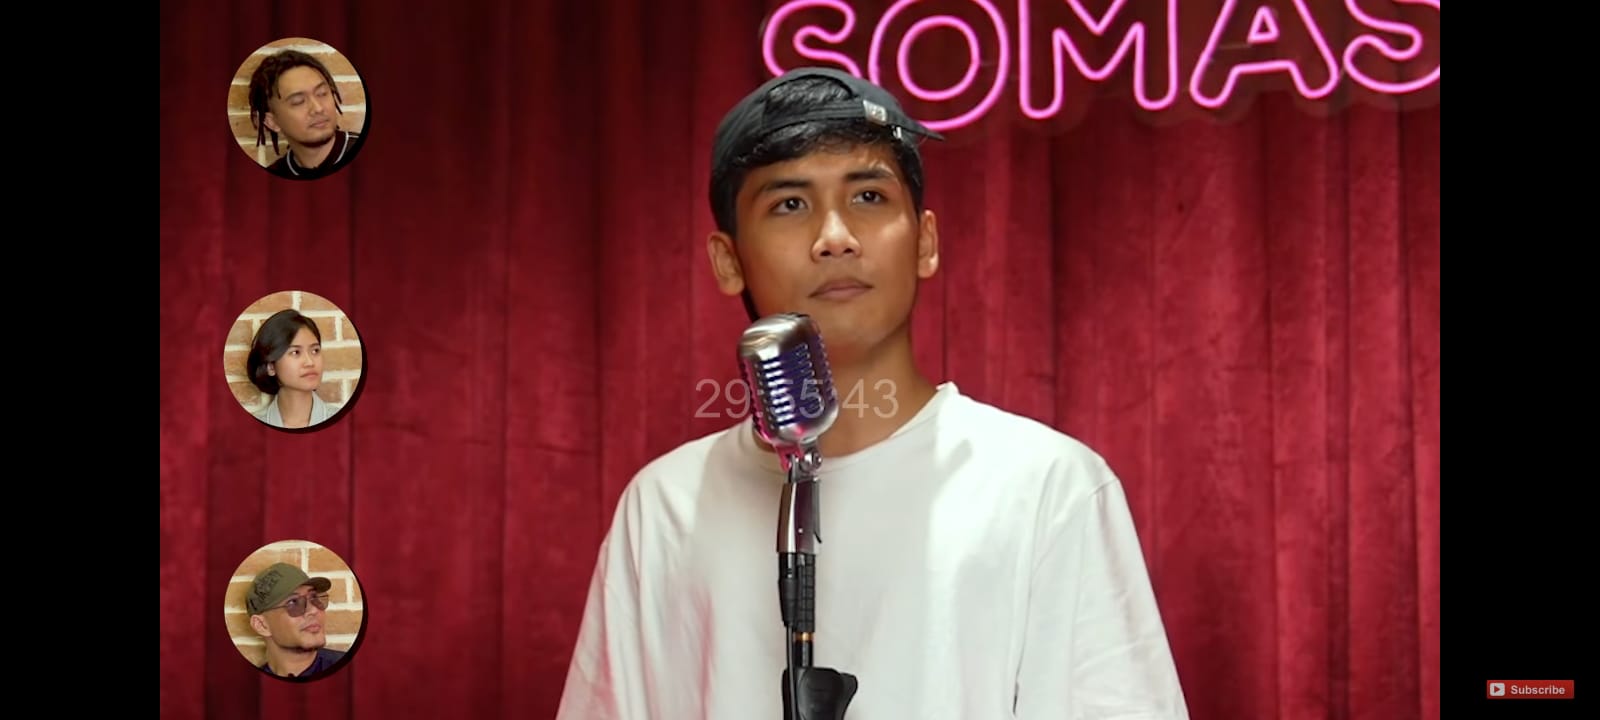 Bintang Emon kritik pemerintah Indonesia di SOMASI Deddy Corbuzier, (Foto: Youtube Deddy Corbuzier)